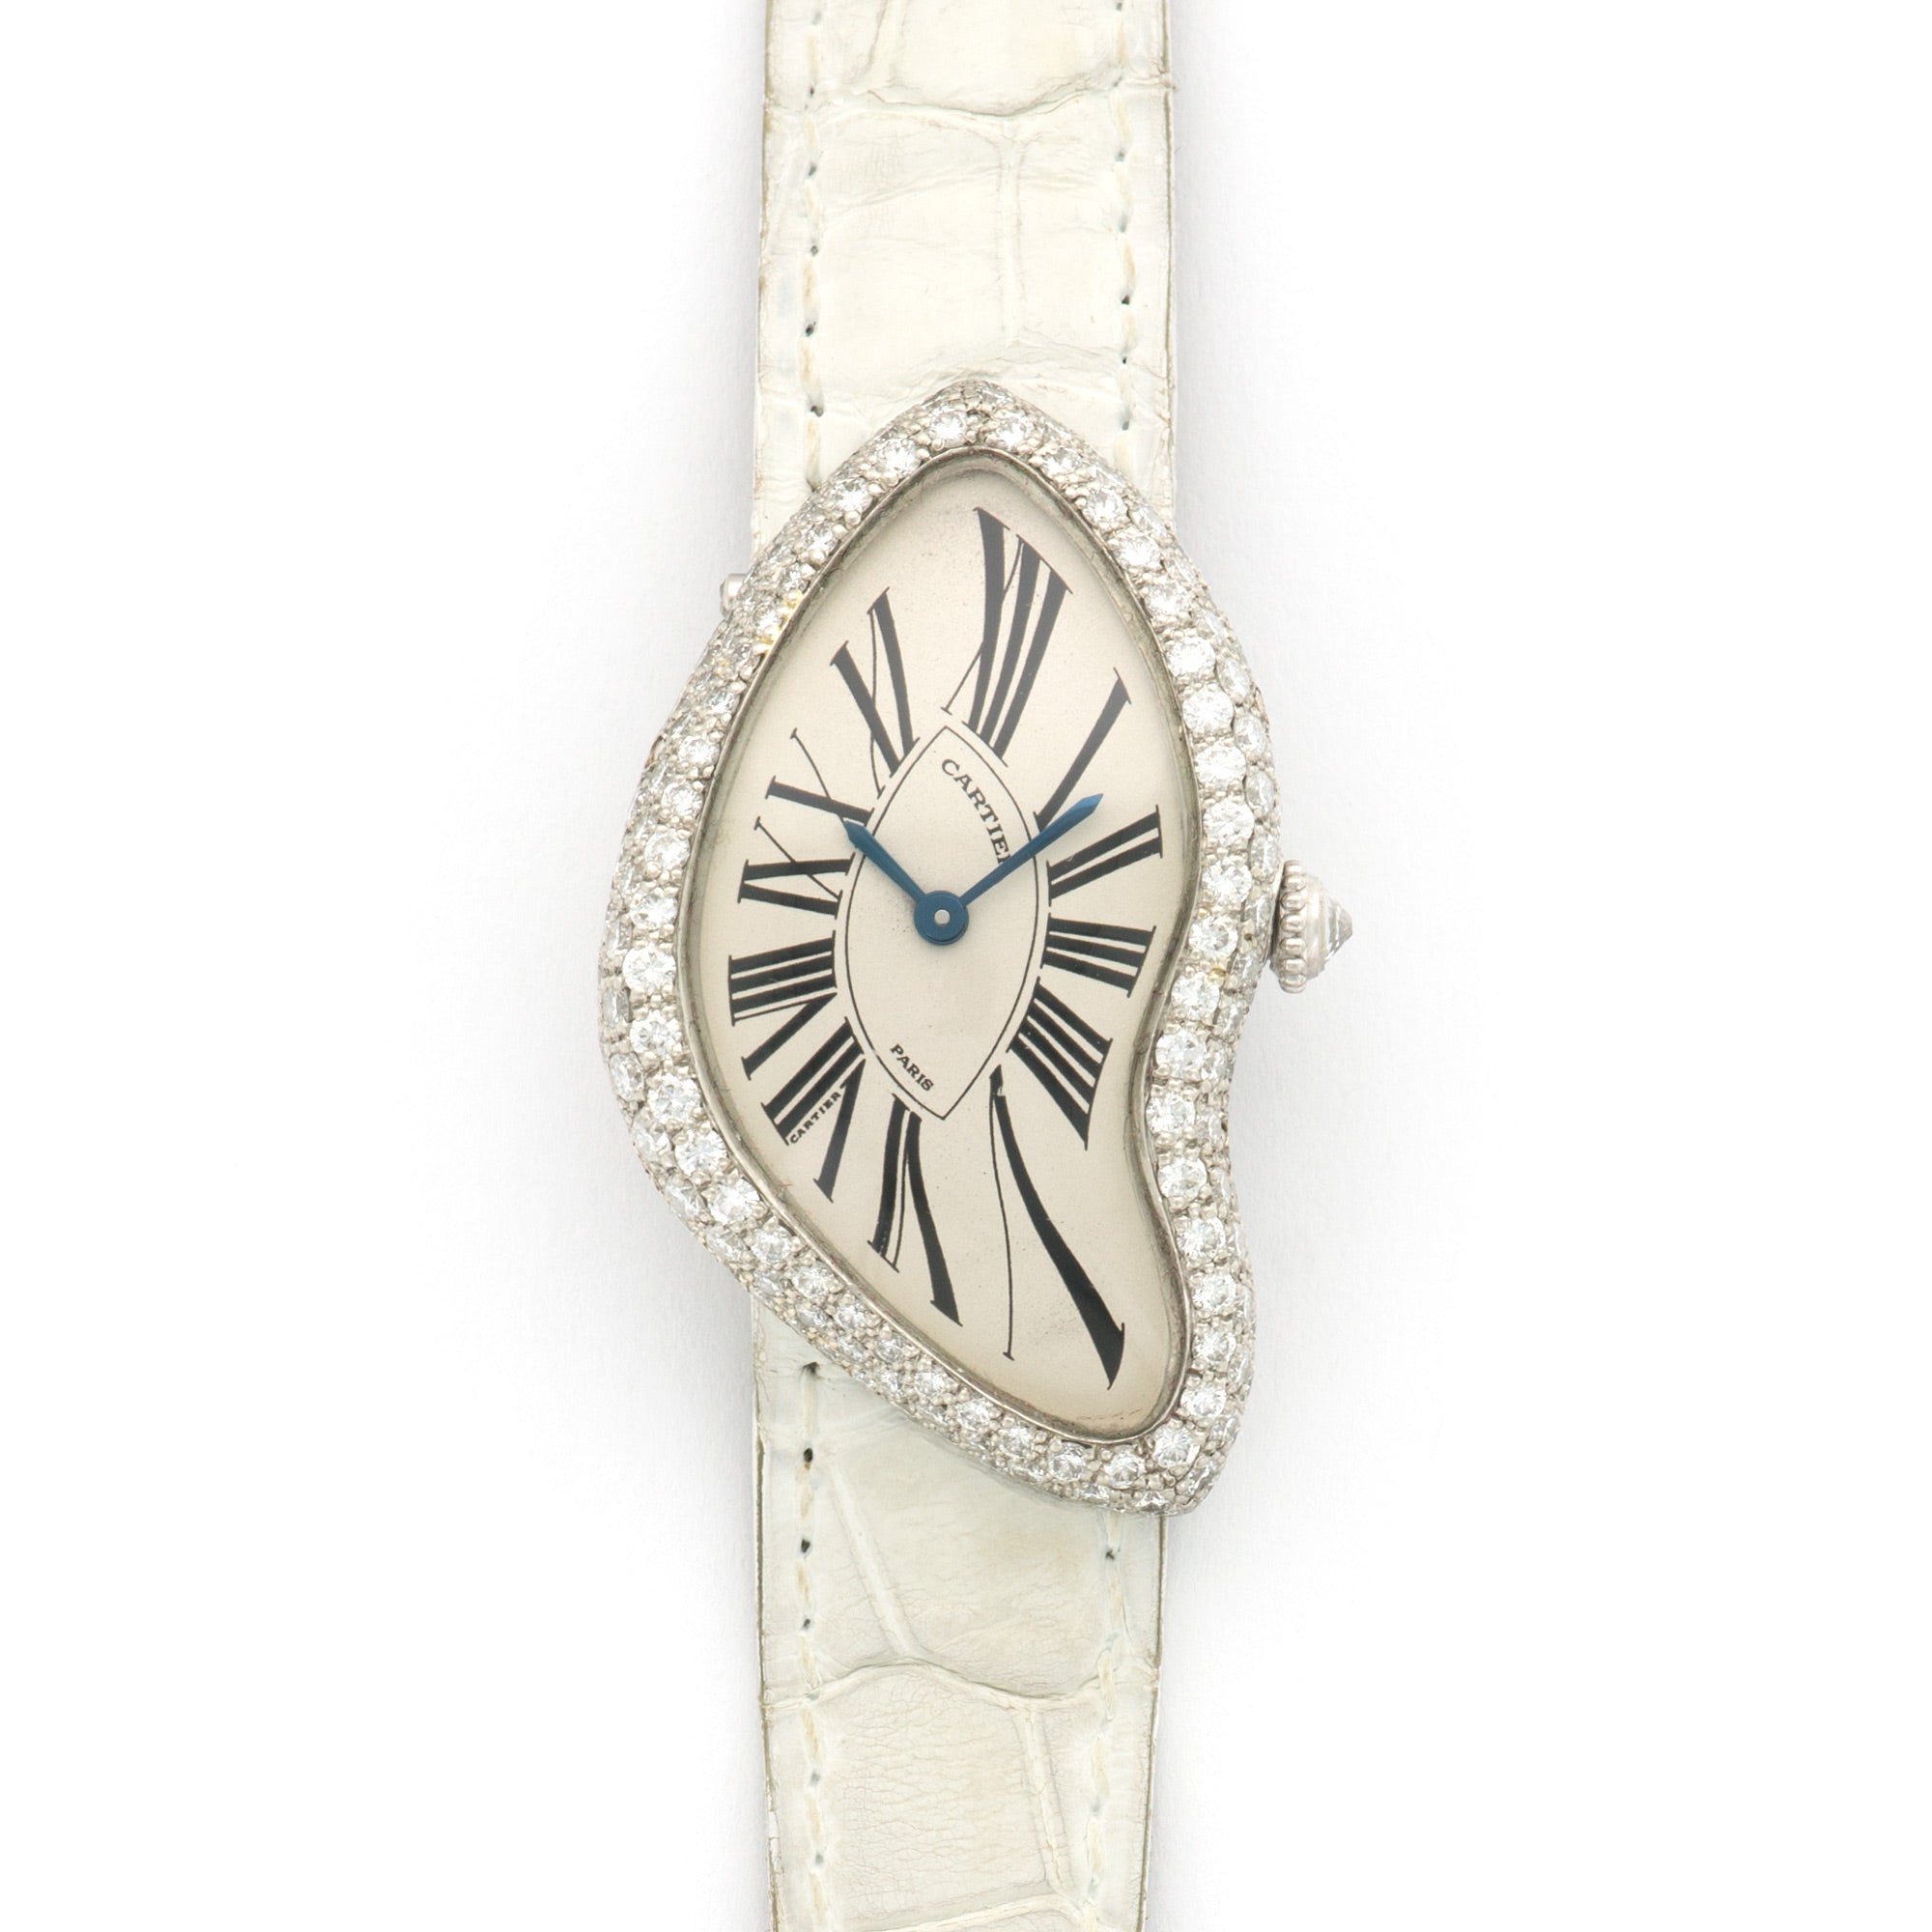 Cartier - Cartier Platinum Crash Diamond Watch - The Keystone Watches